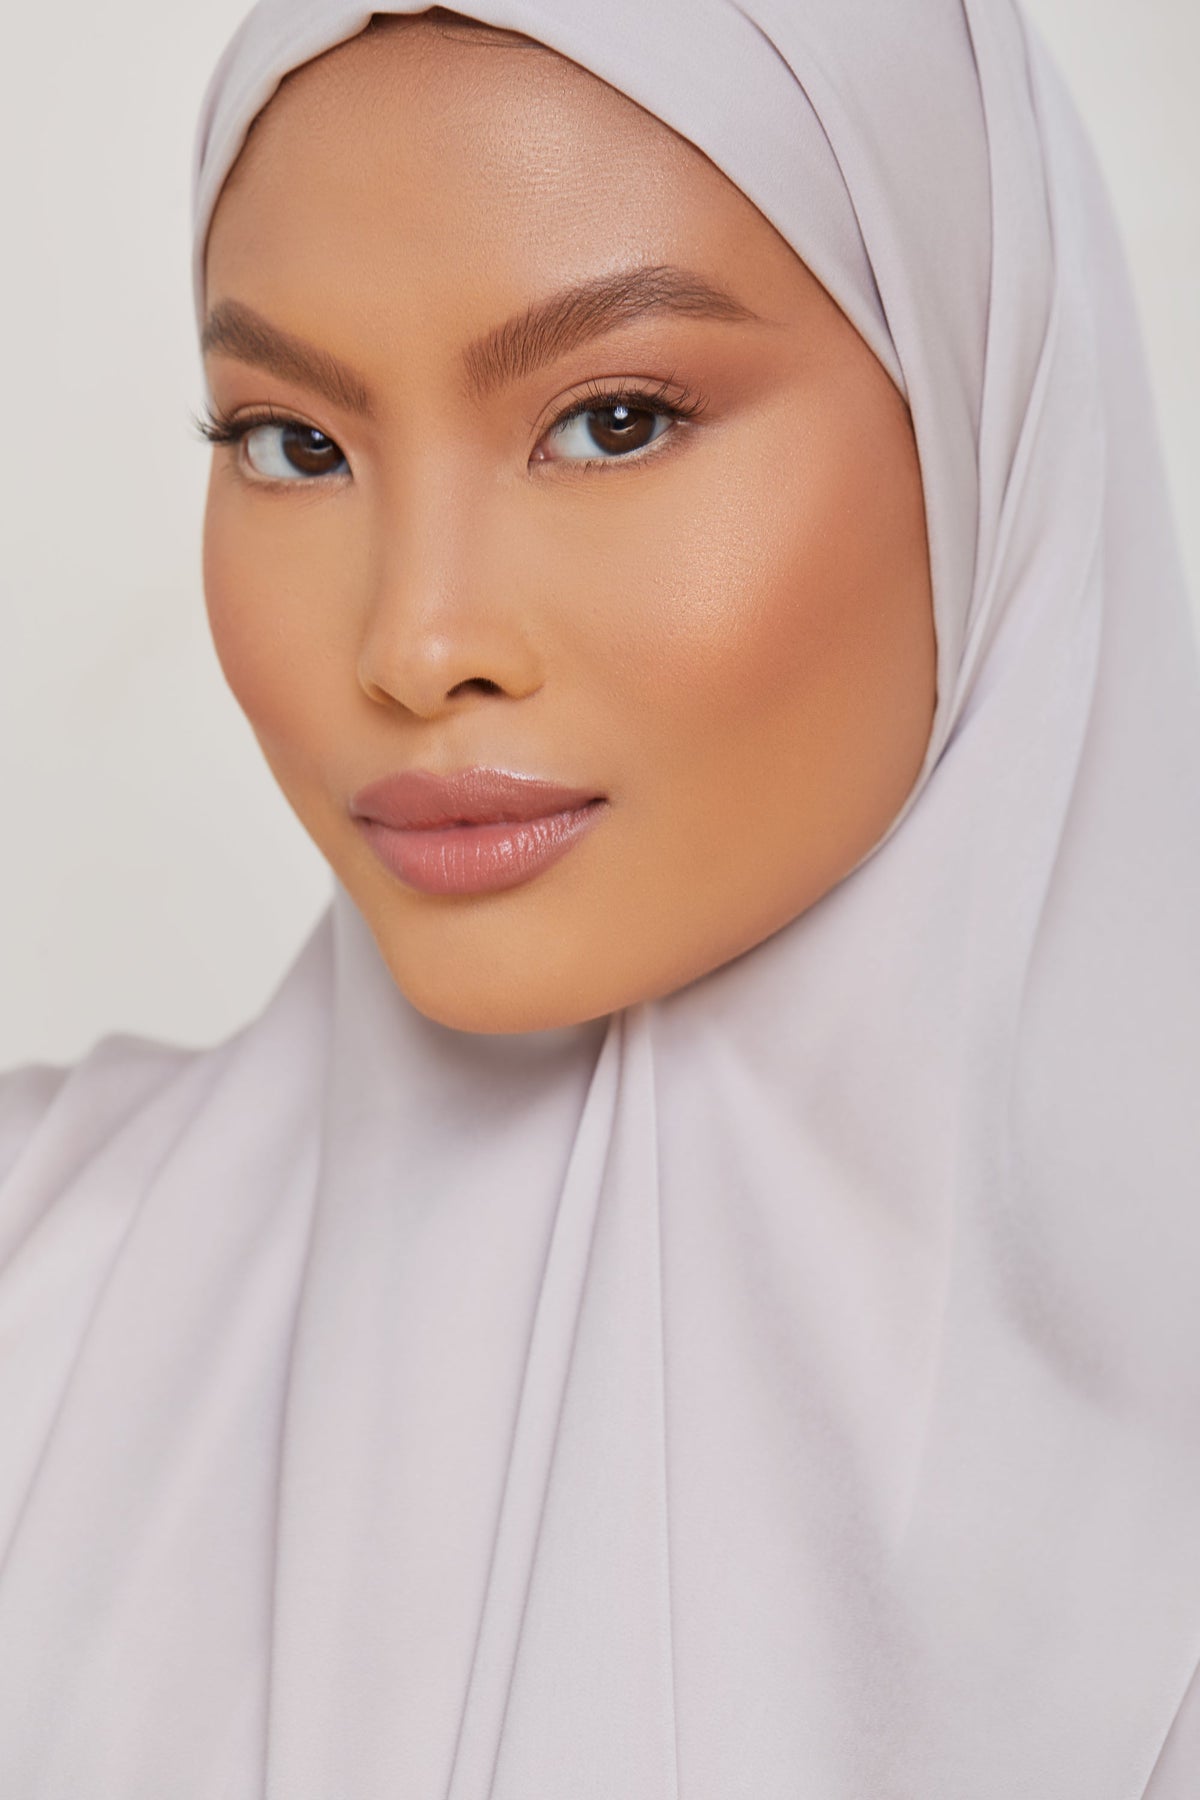 MATTE Satin Hijab - Shining Silver epschoolboard 